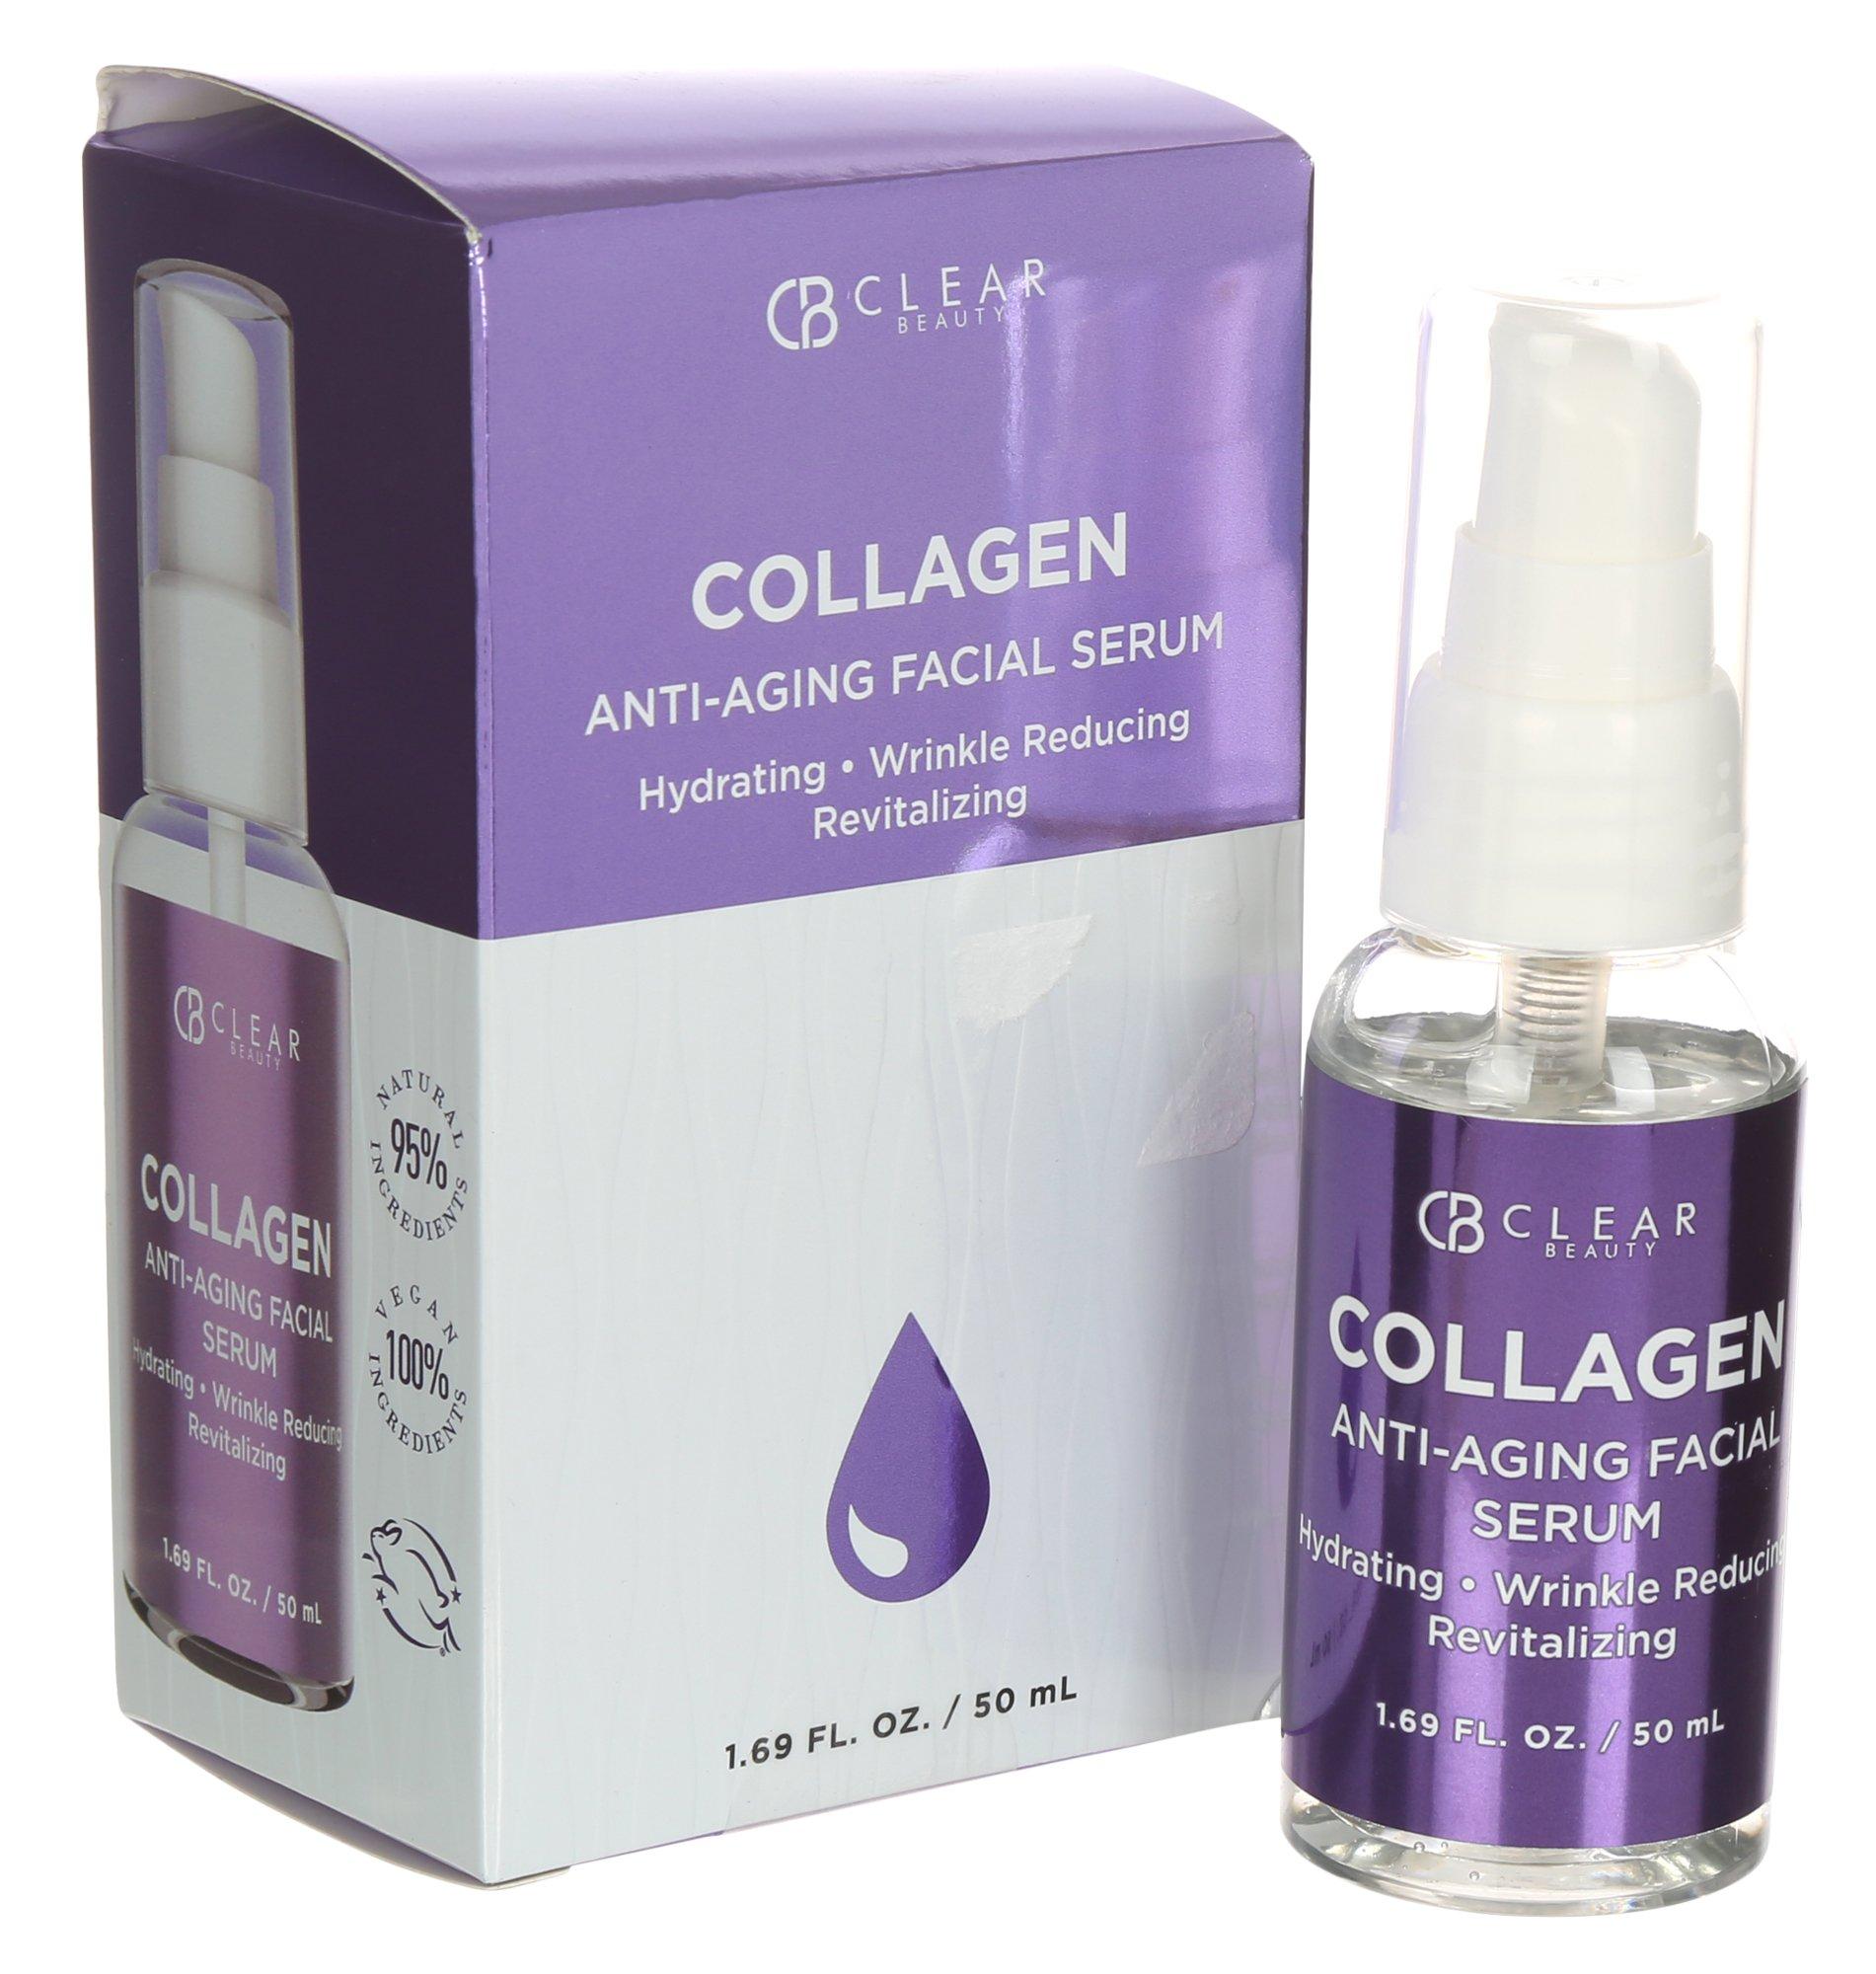 Collagen Anti-Aging Facial Serum